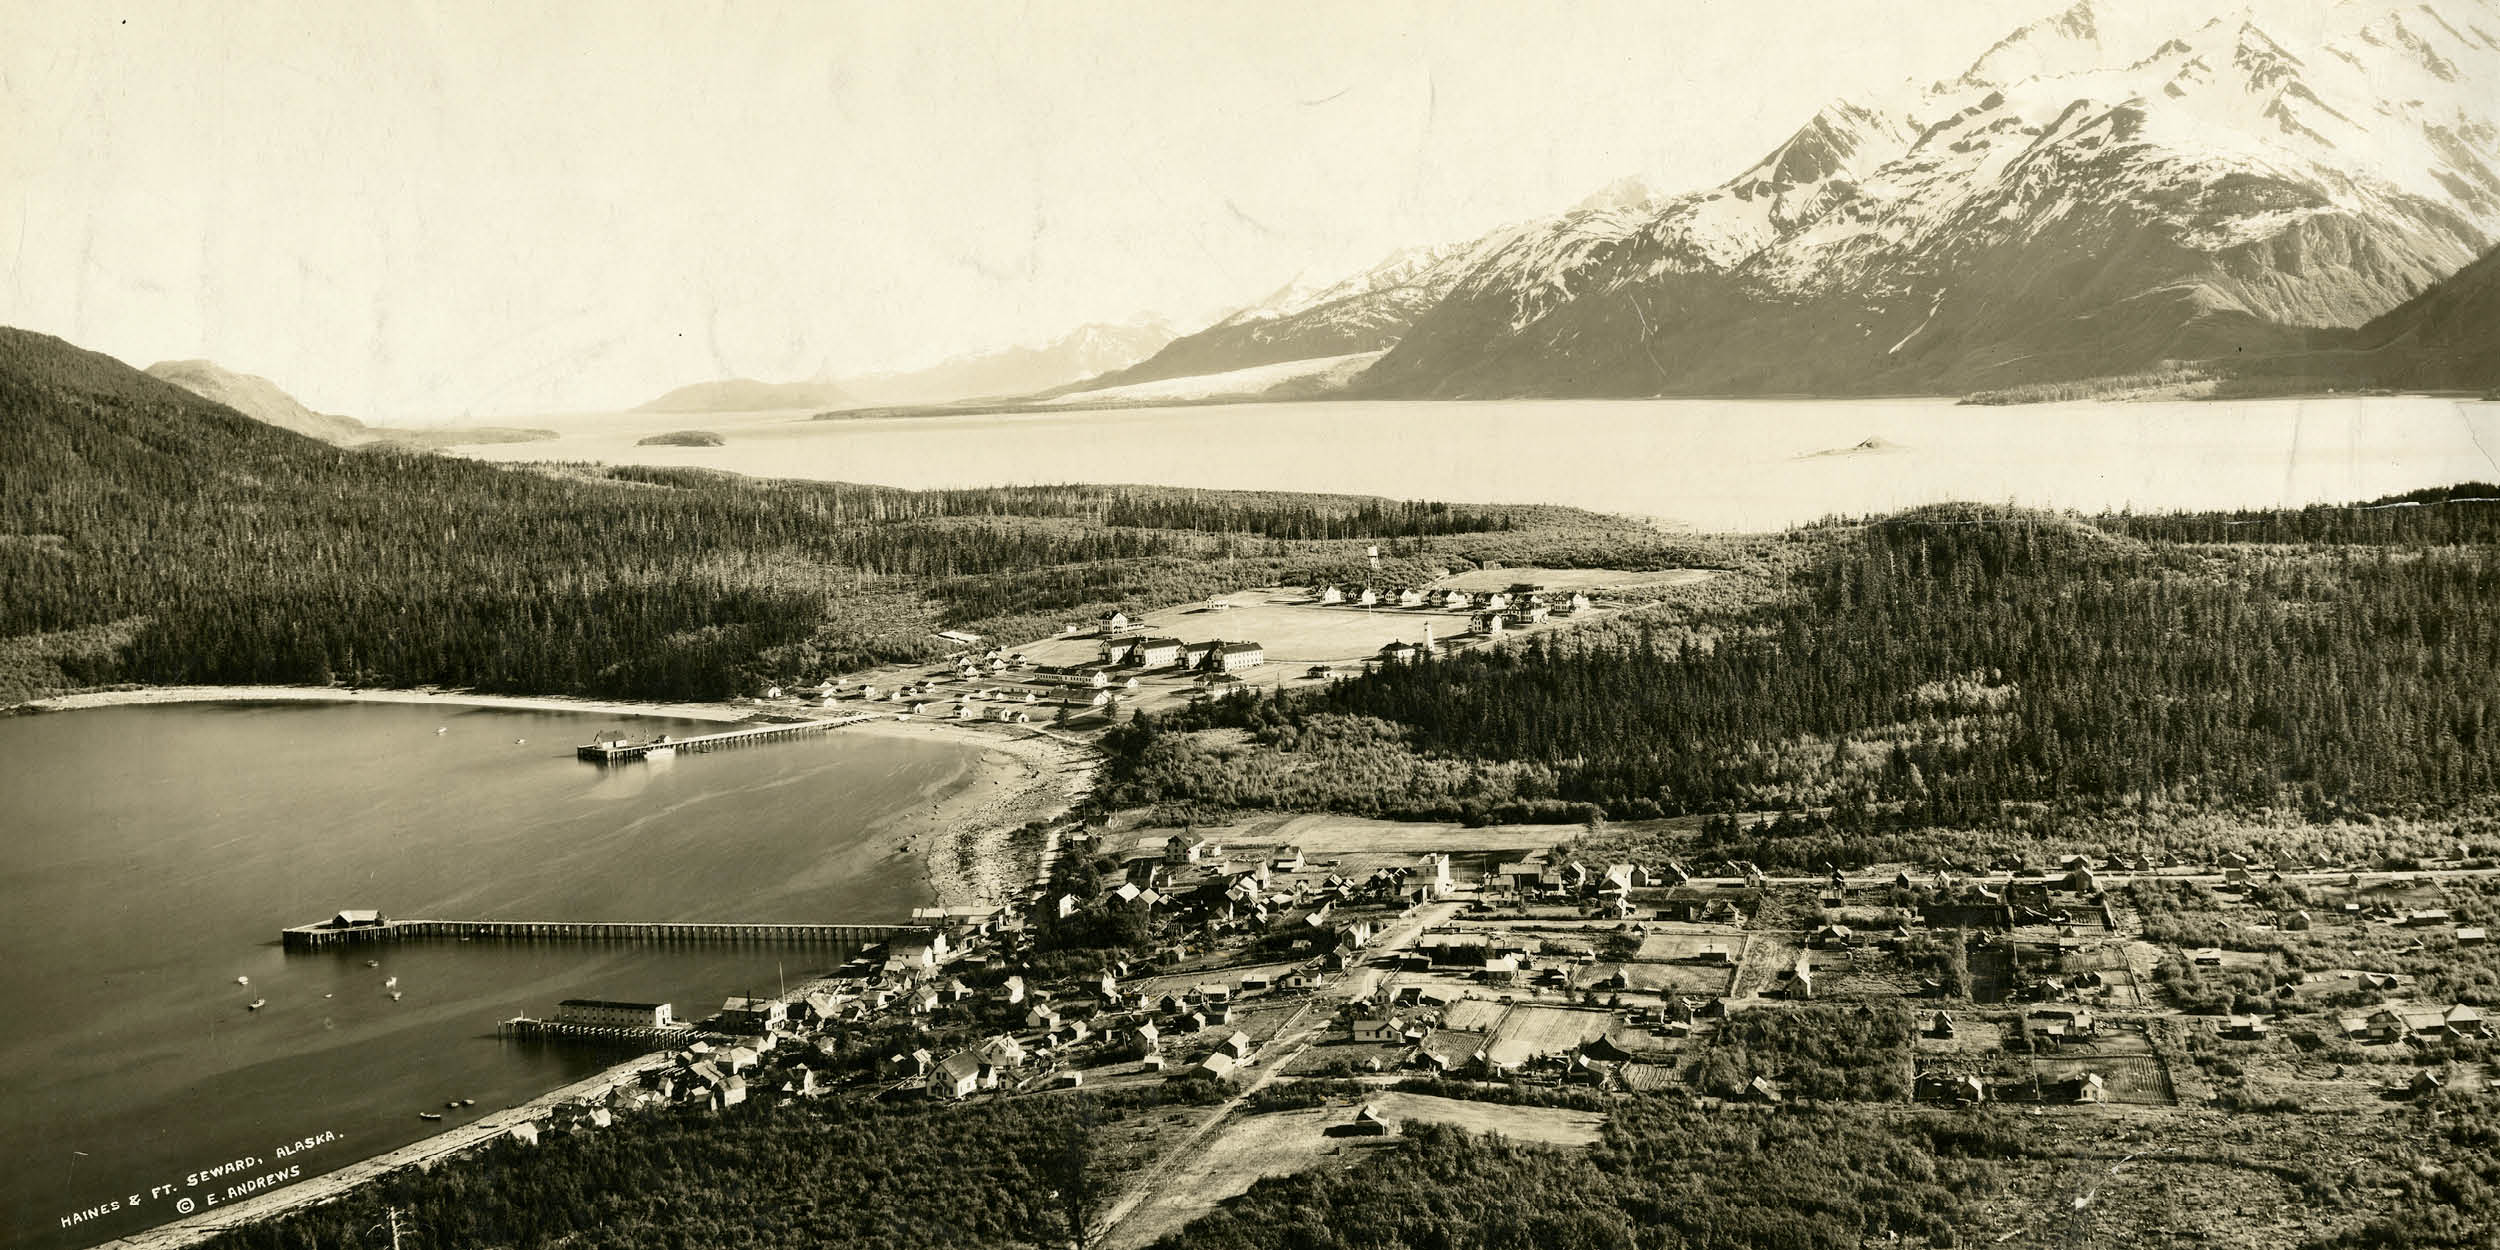 General History of Haines, Alaska